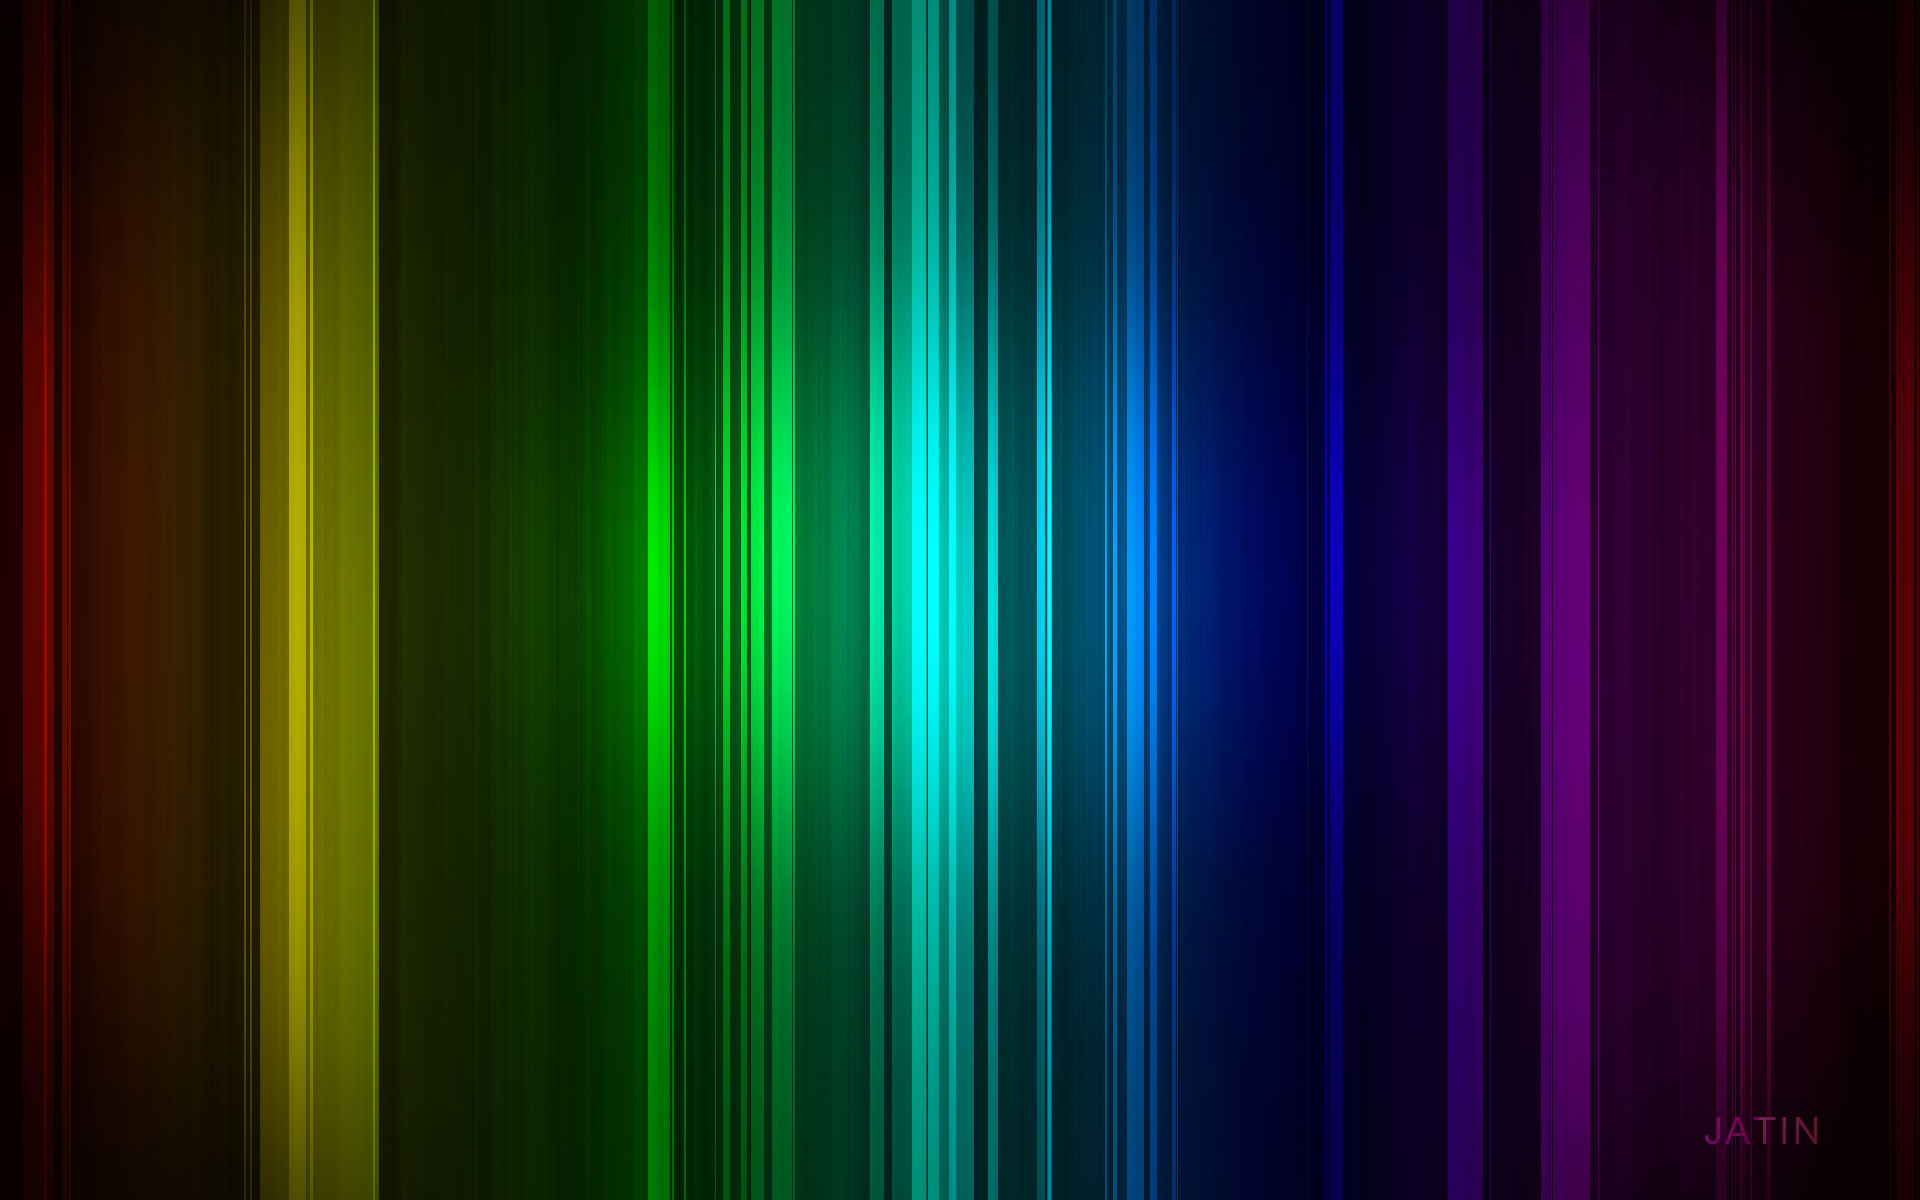 jatin name wallpaper,verde,azul,ligero,violeta,púrpura